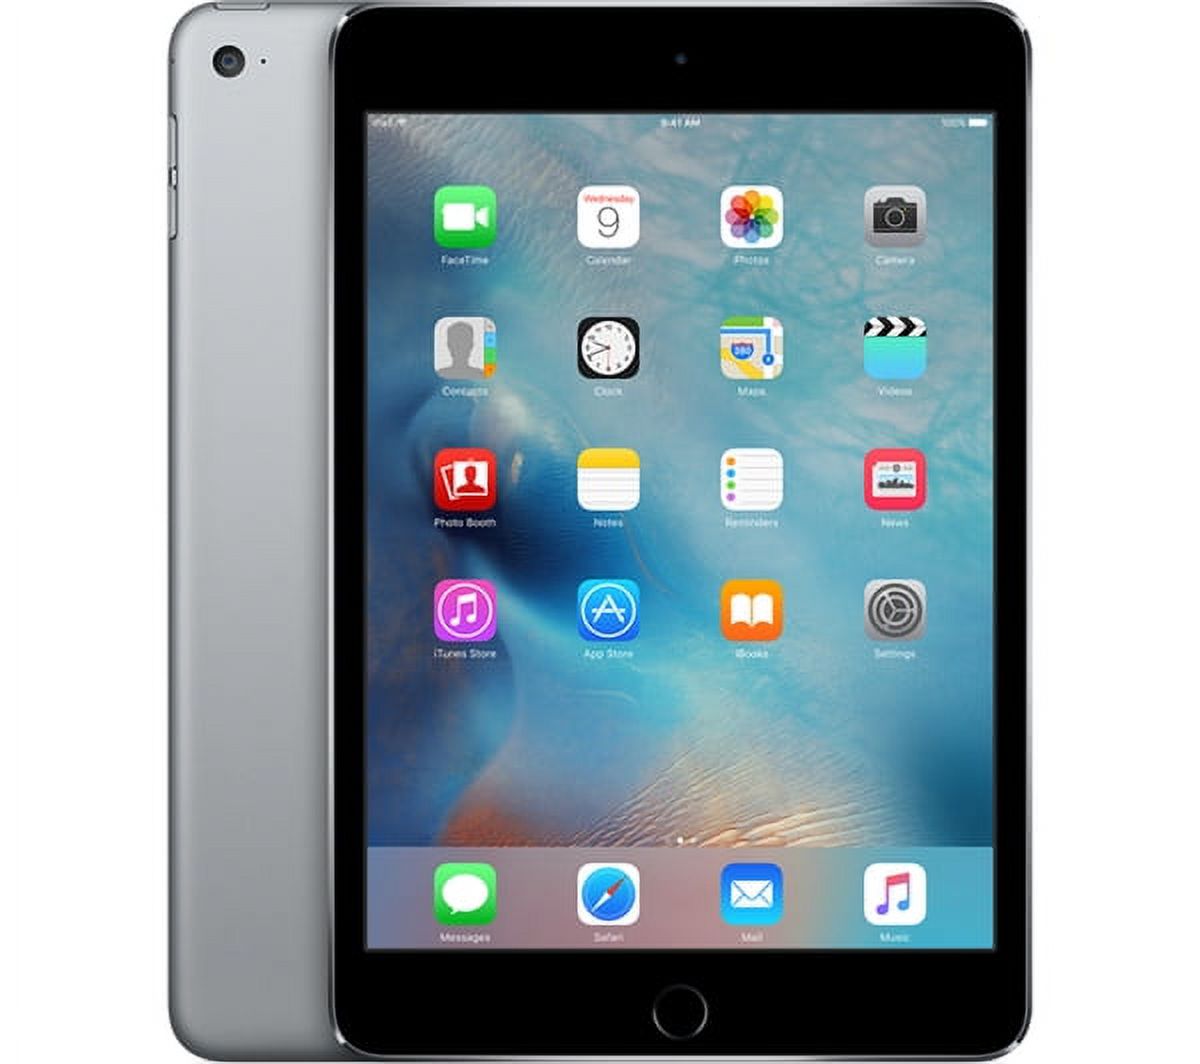 Restored Apple iPad mini 16GB Wi-Fi - Black (Refurbished) - image 1 of 4